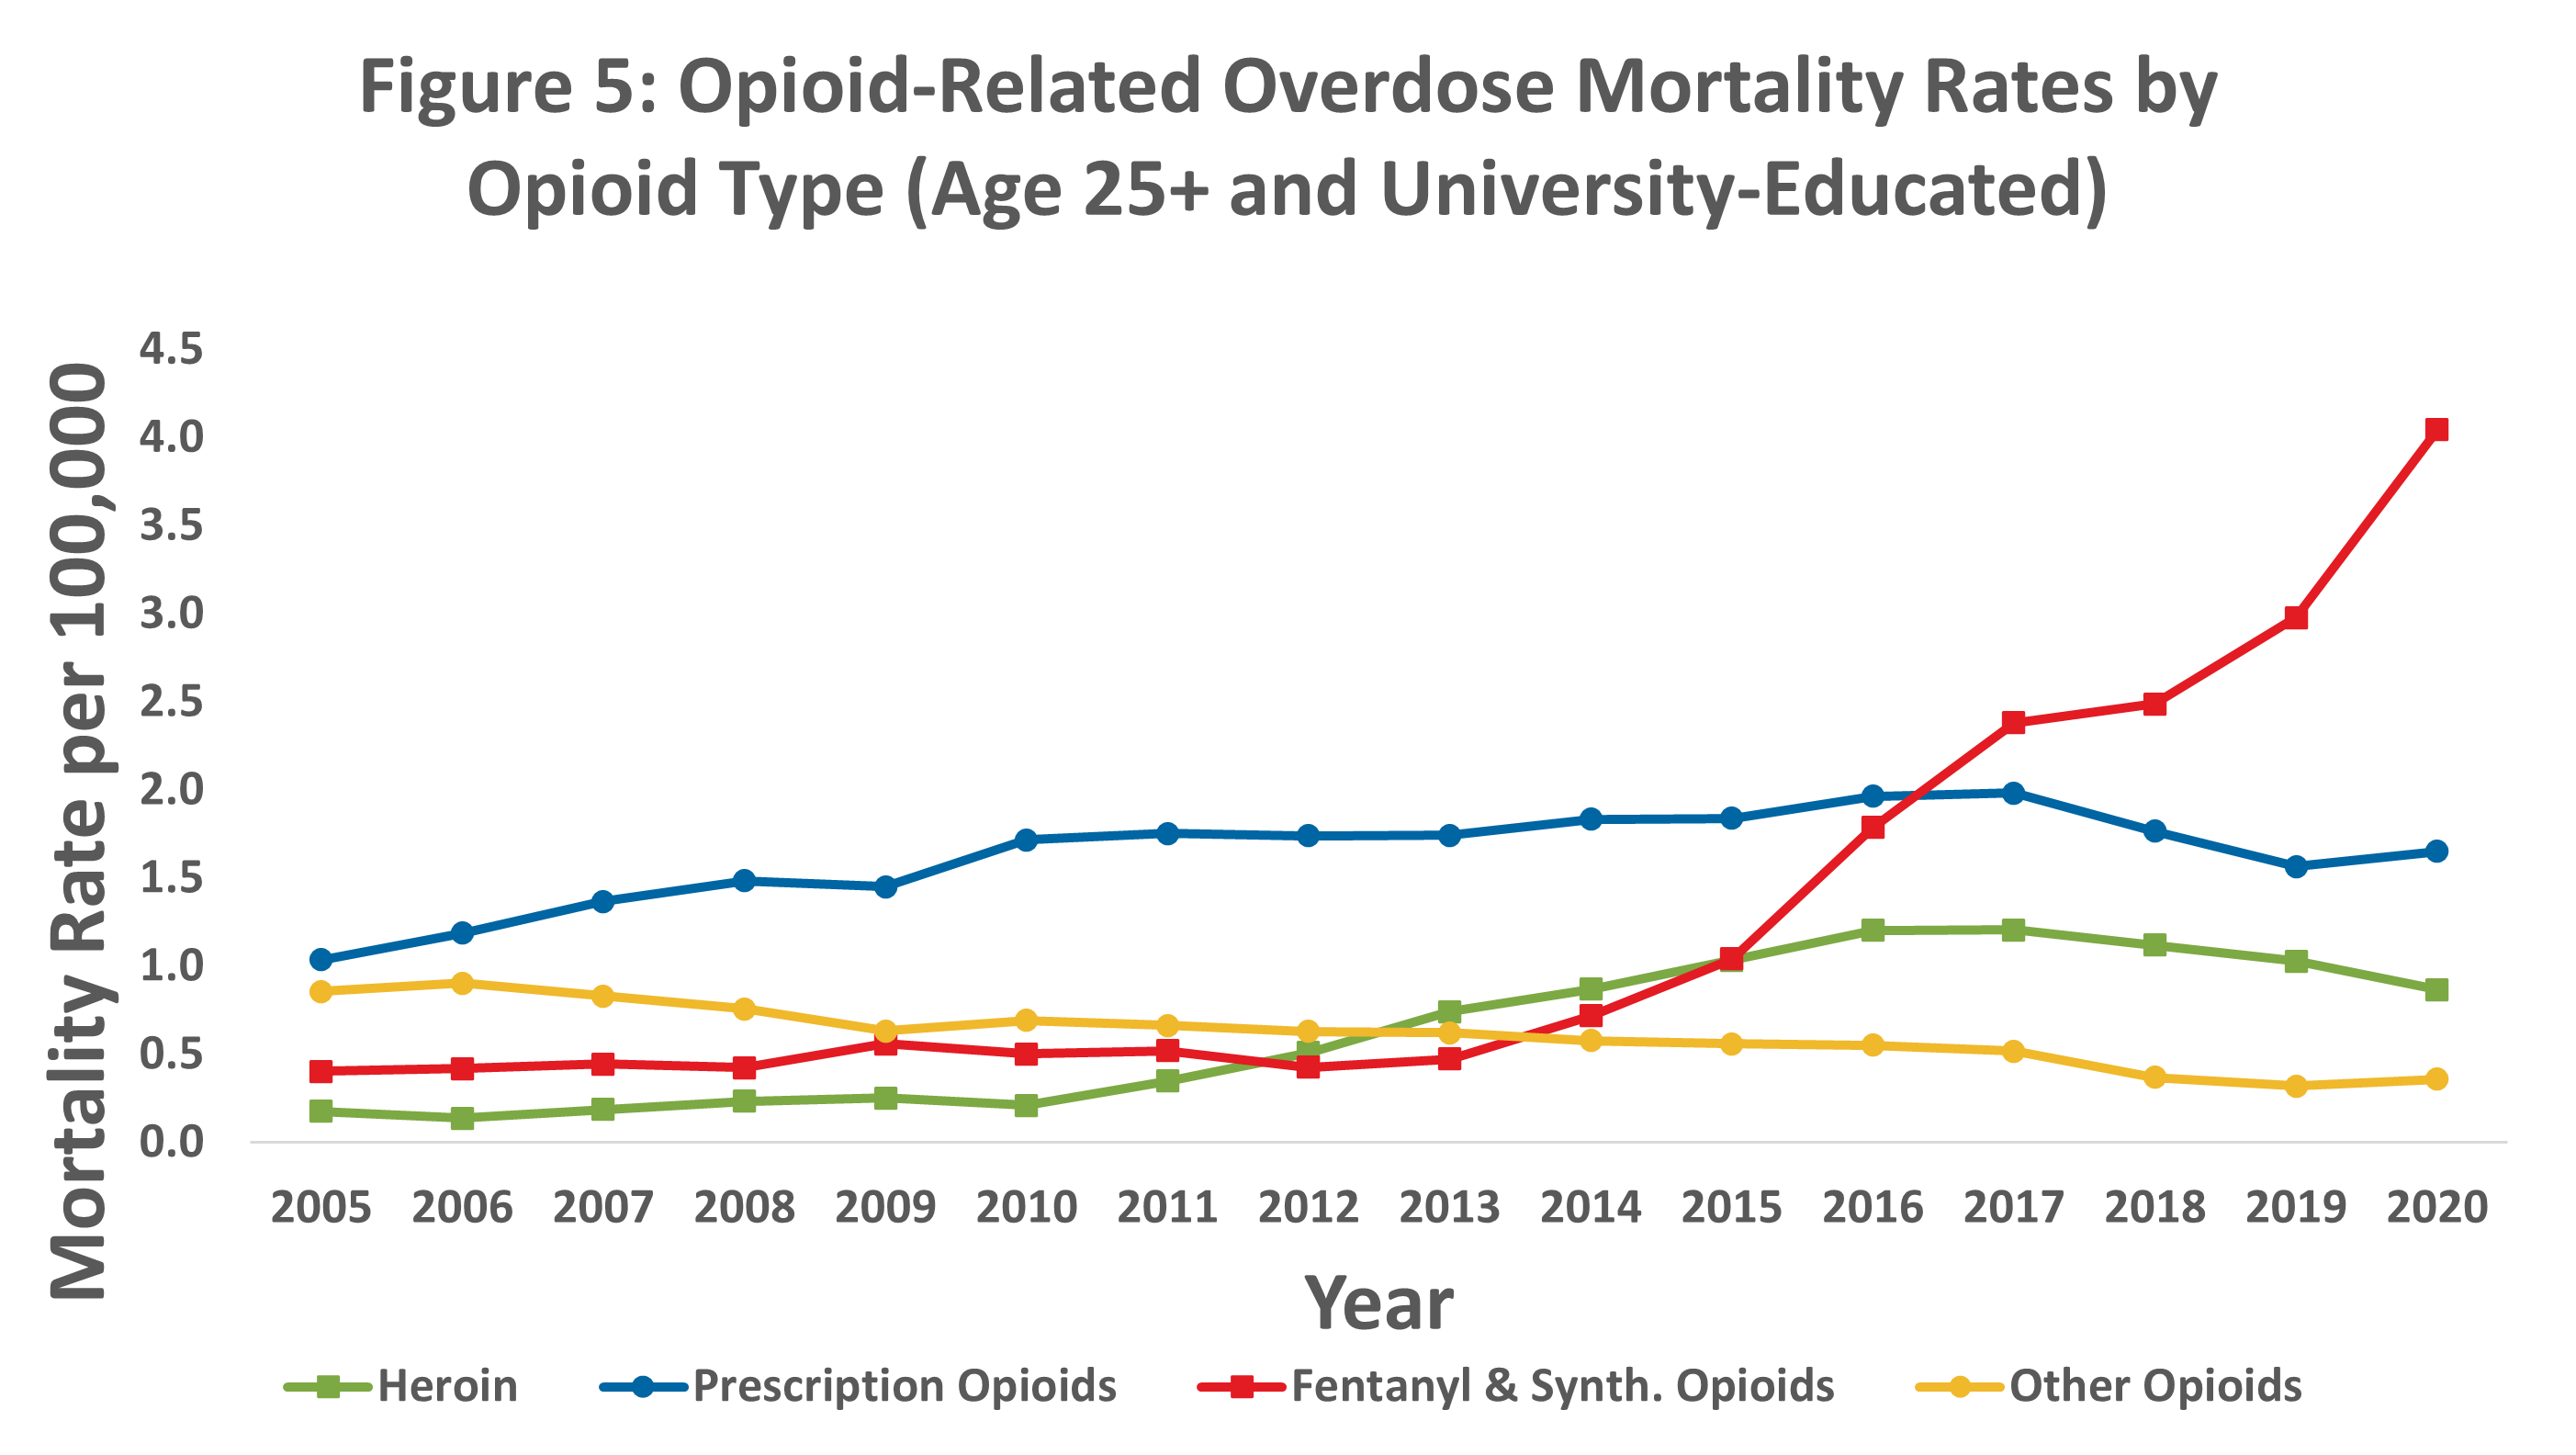 RGA_Opioid mortality 2020_Figure 5